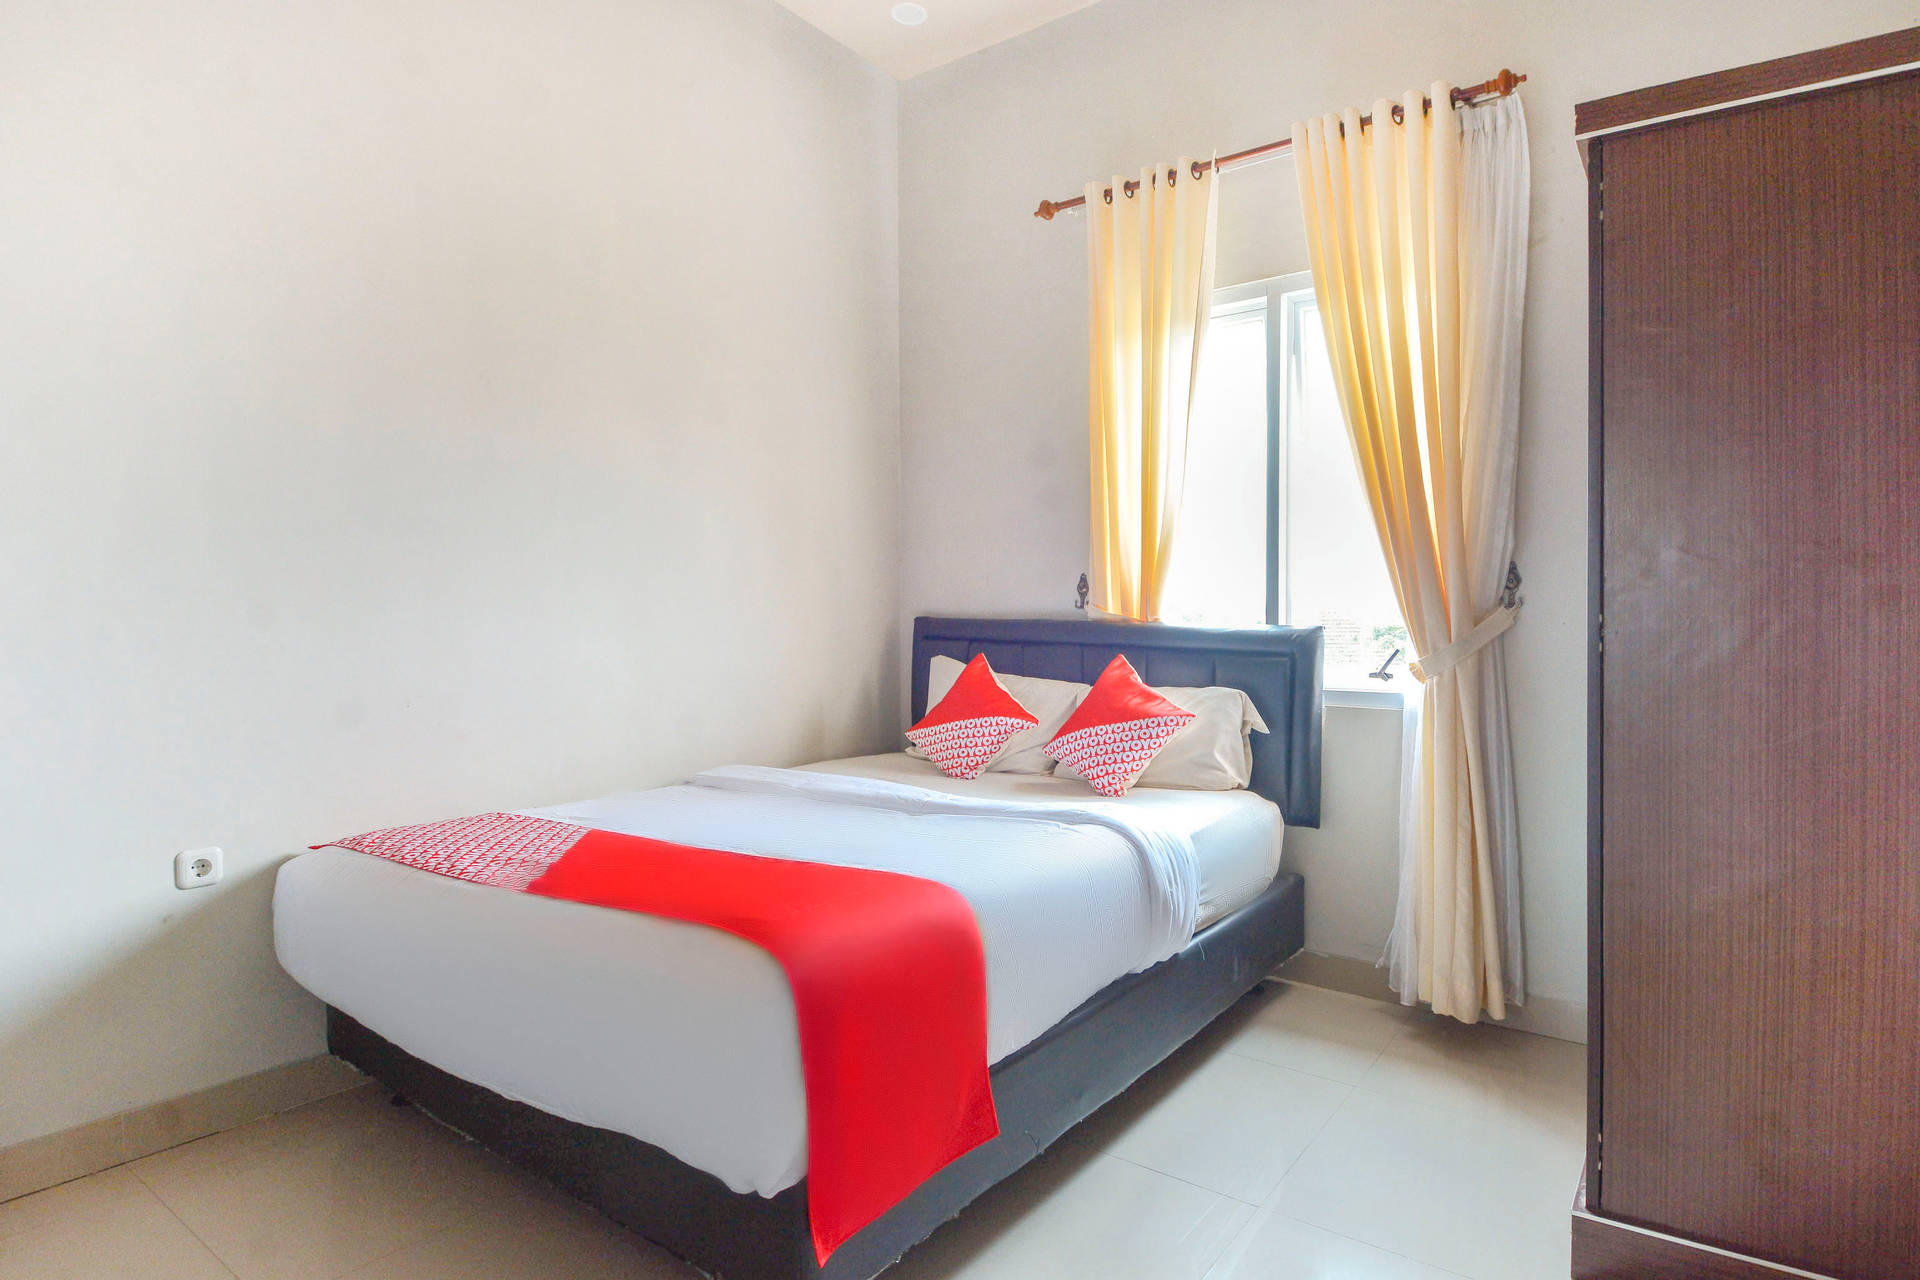 Bedroom 1, OYO 3232 Rd Kost (tutup sementara), Palembang